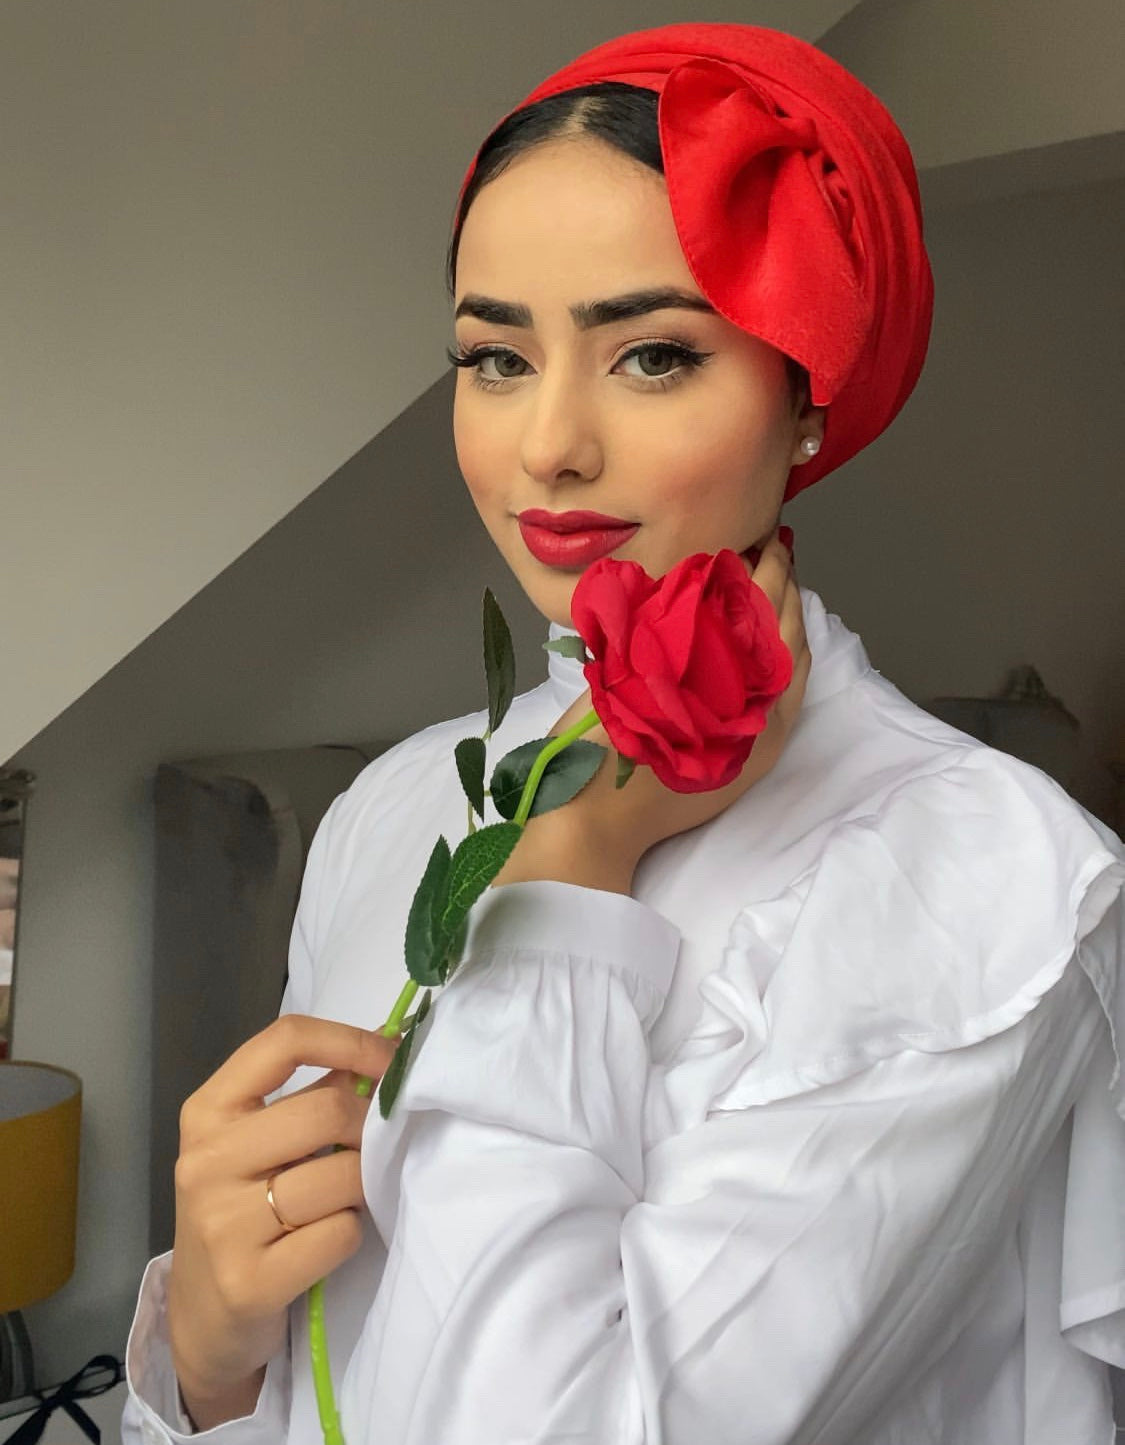 Red Sateen Hijab